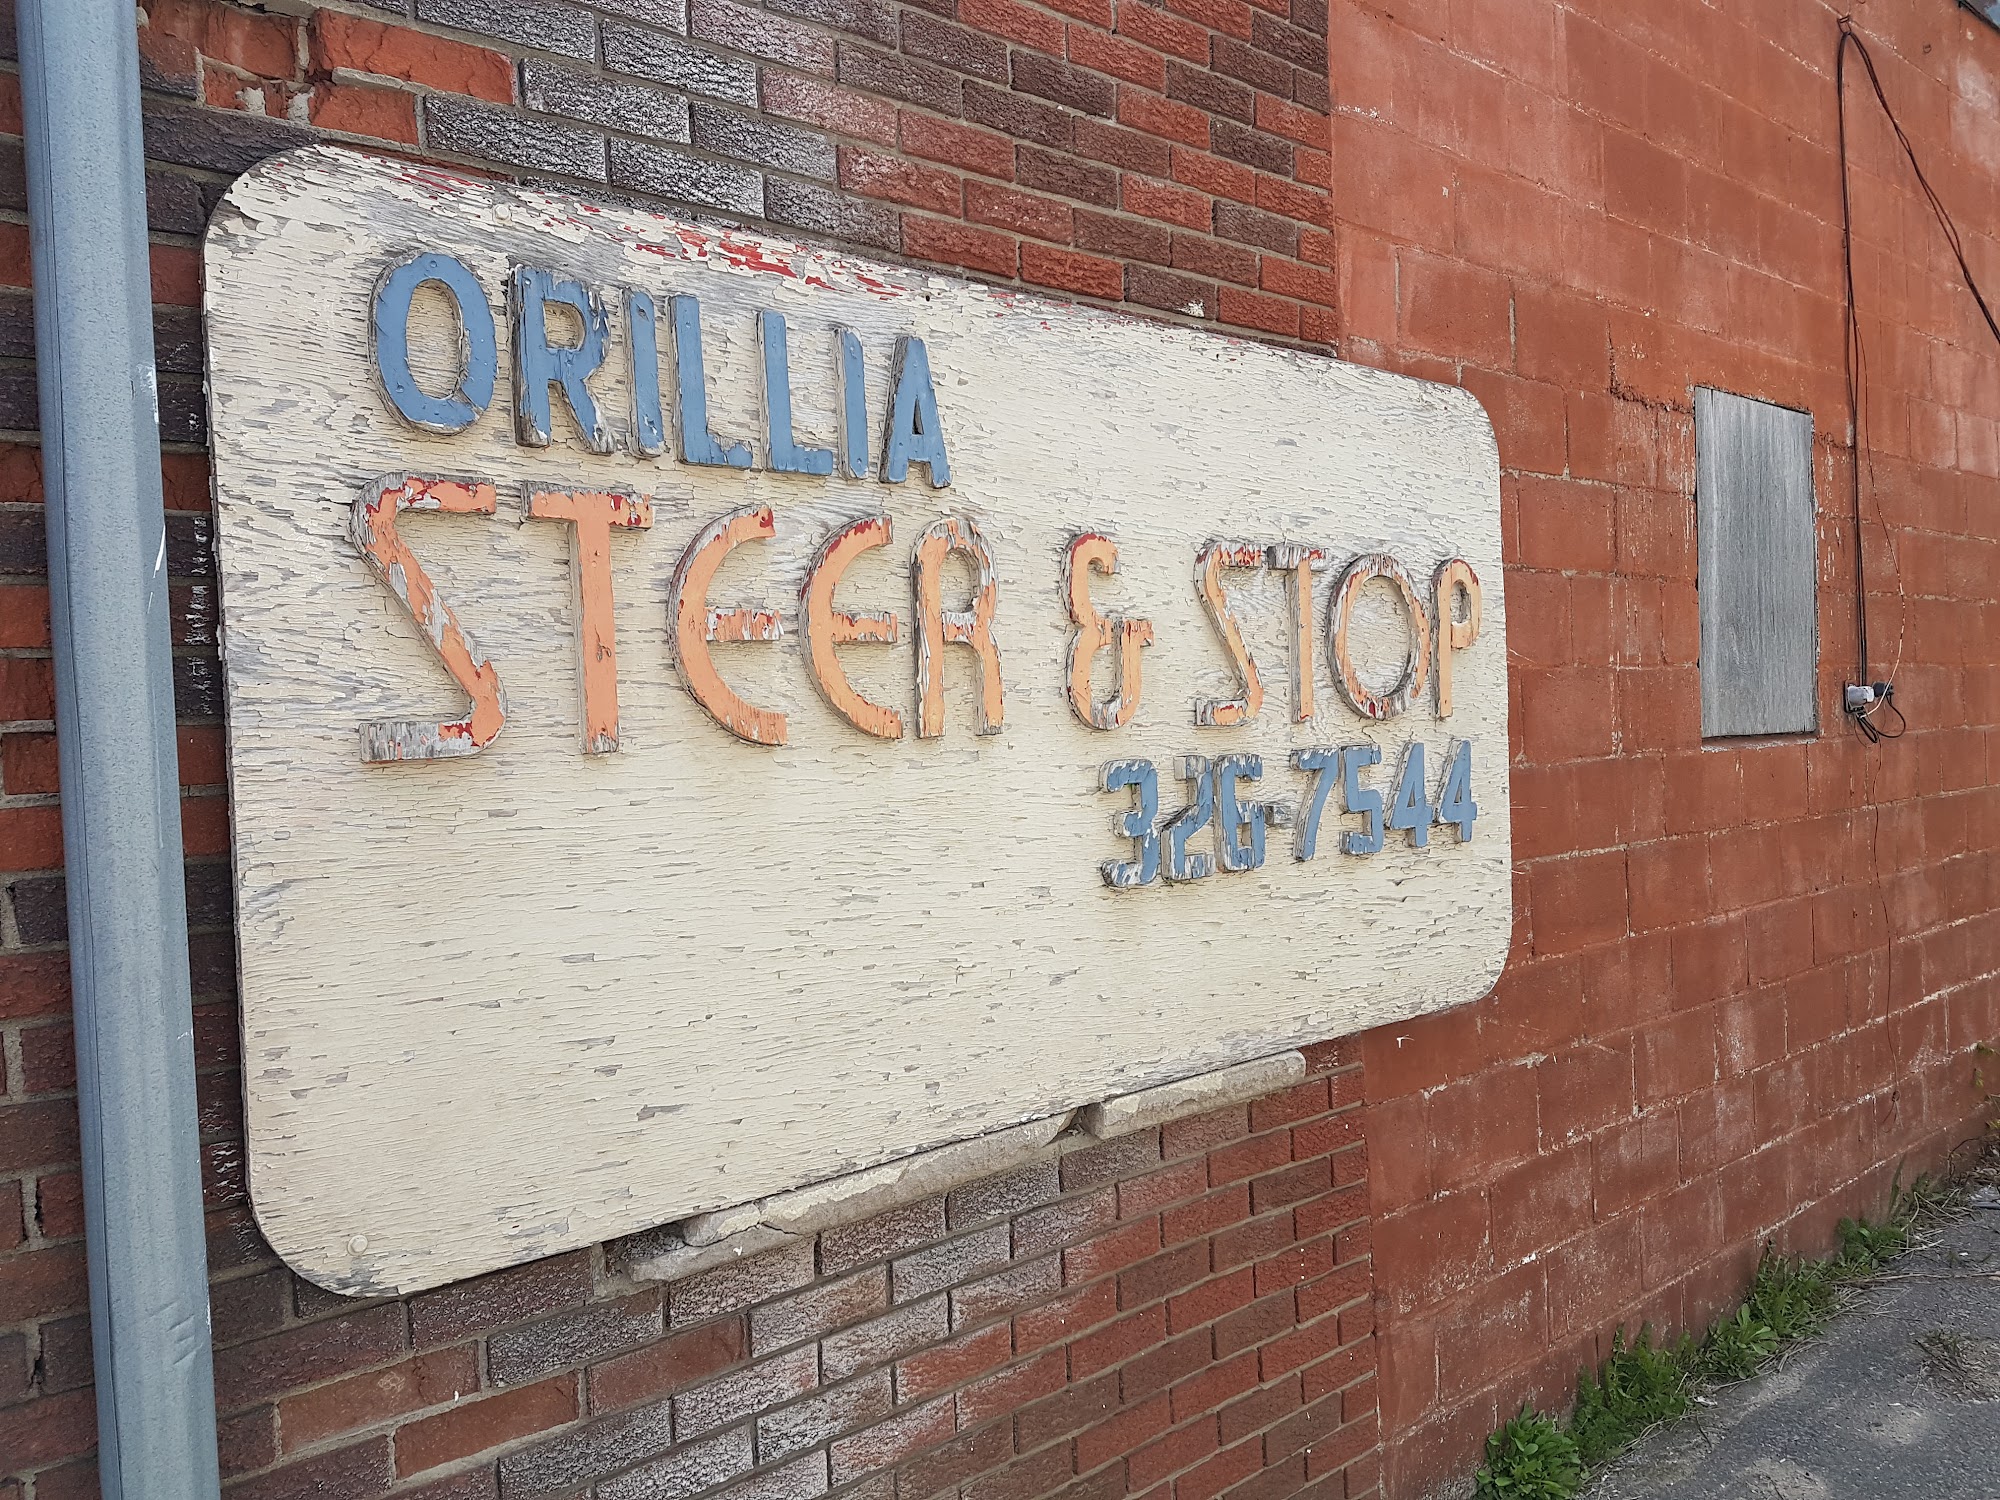 Orillia Steer & Stop